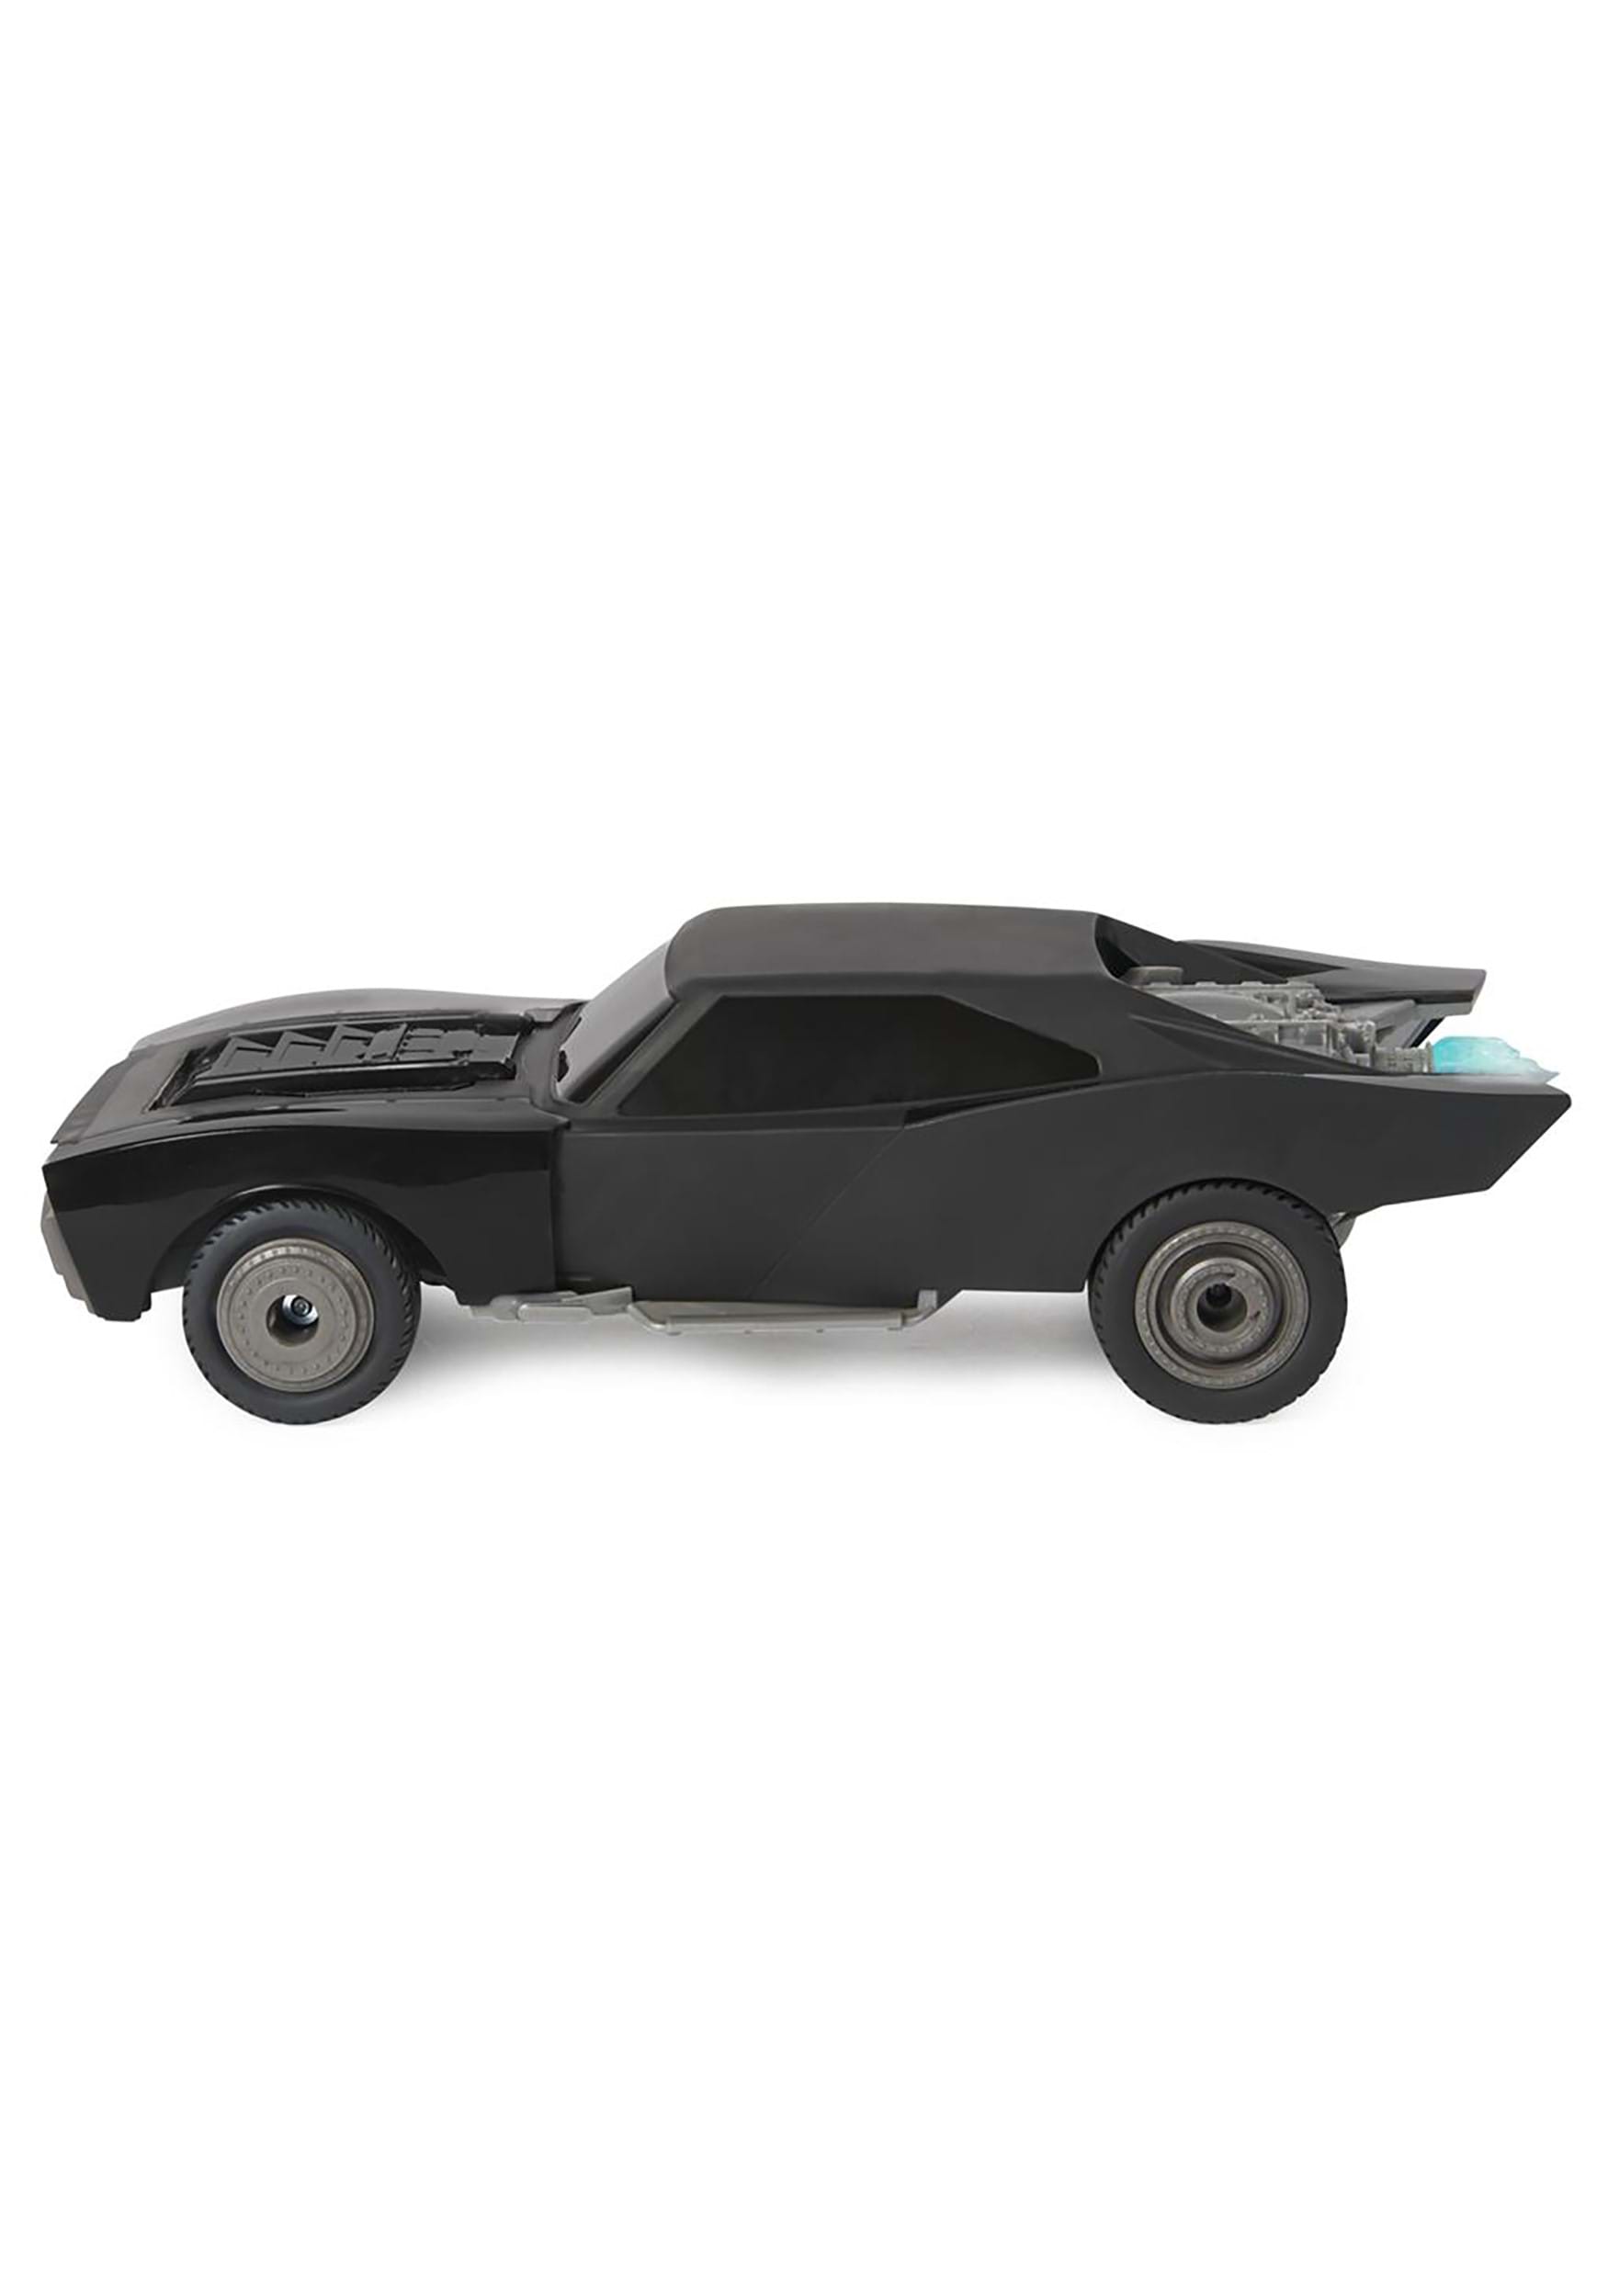 Turbo Boost Batmobile RC The Batman Movie